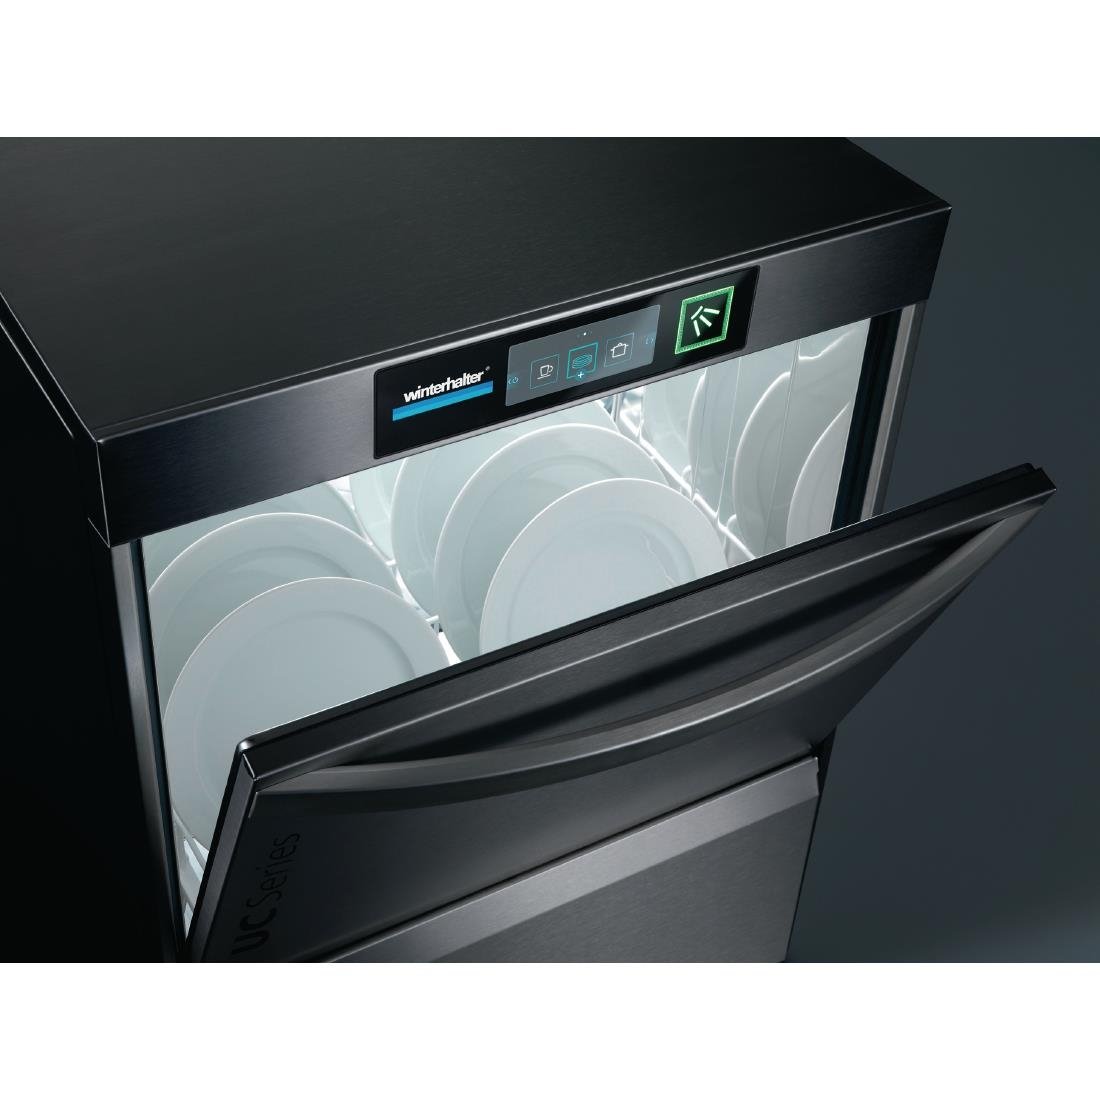 DE646 Winterhalter Undercounter Dishwasher UC-XL JD Catering Equipment Solutions Ltd